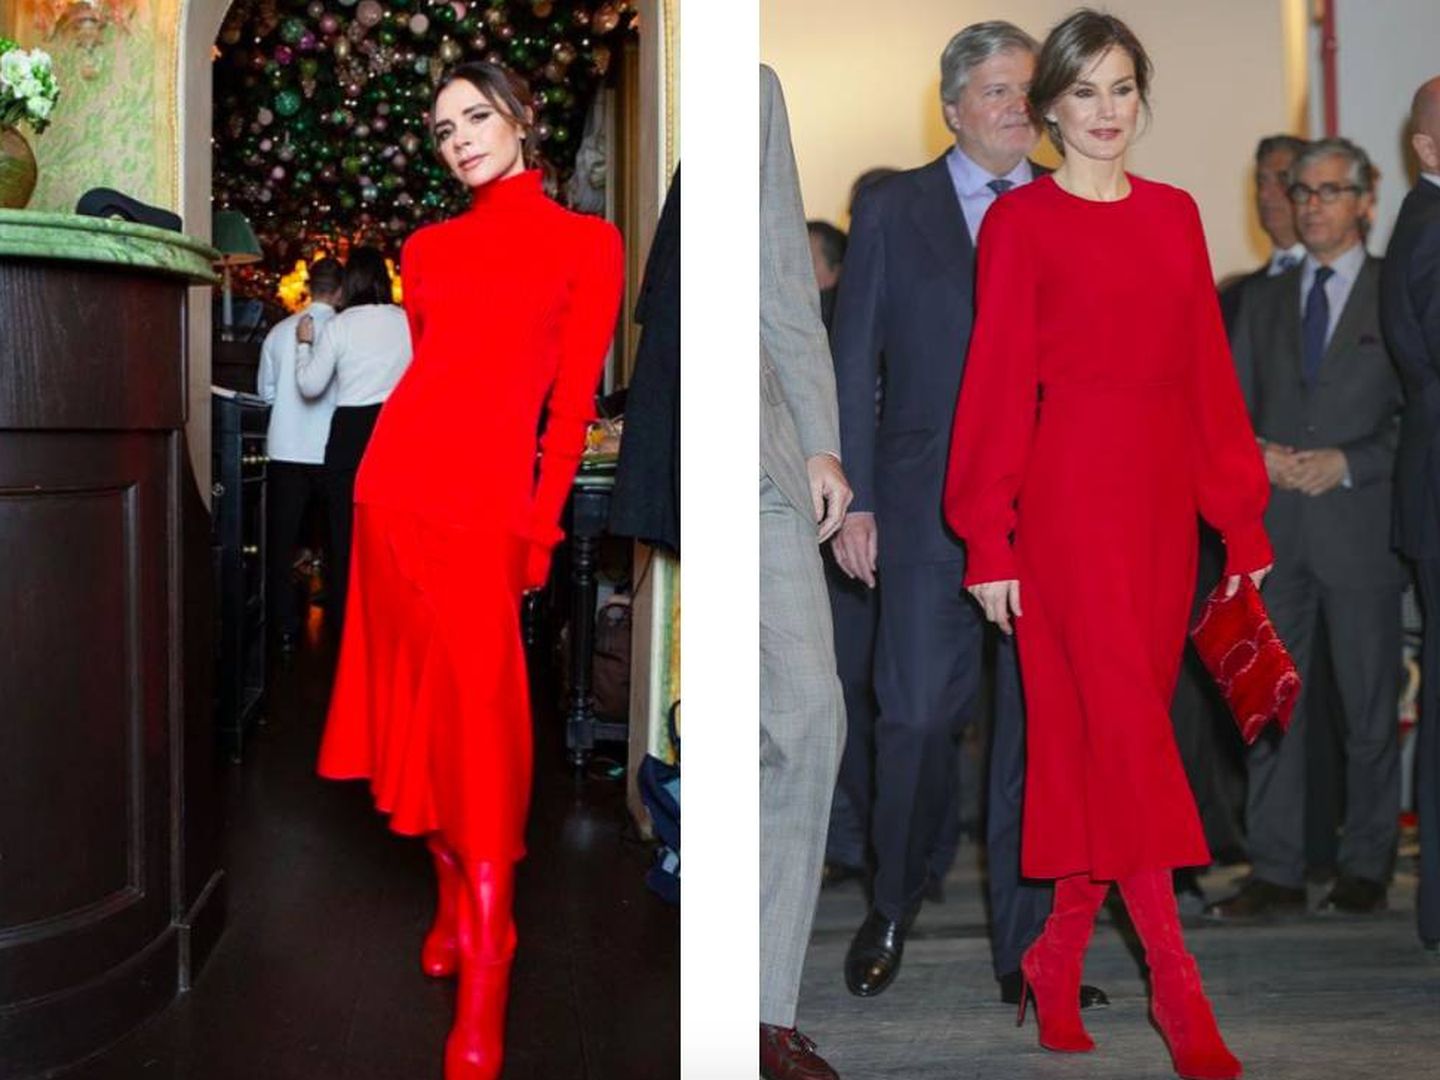 Juzga tú mismo, ¿se parecen ambos looks en rojo? (Pinterest)